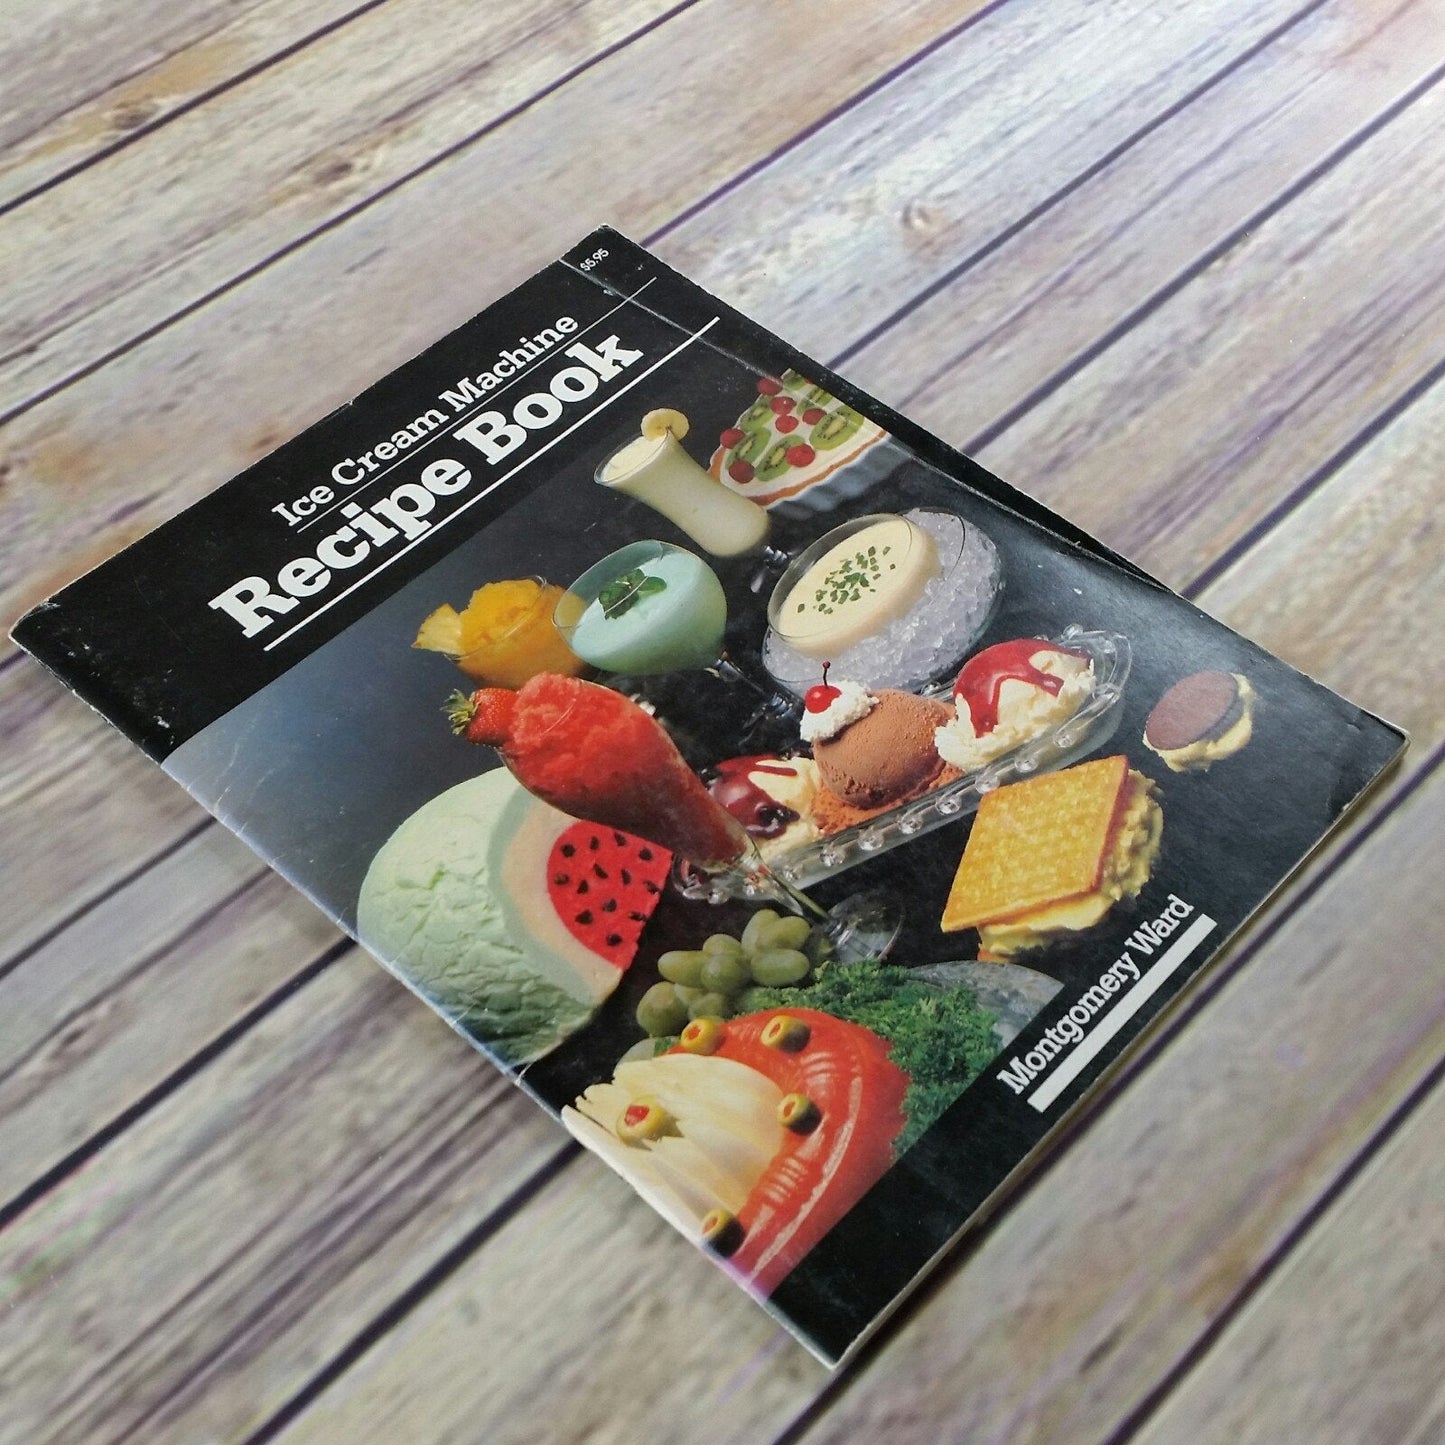 Vintage Ice Cream Cookbook Montgomery Ward Ice Cream Machine Recipe Book 1983 Paperback Recipes Sherbets Yogurt Kids Stuff